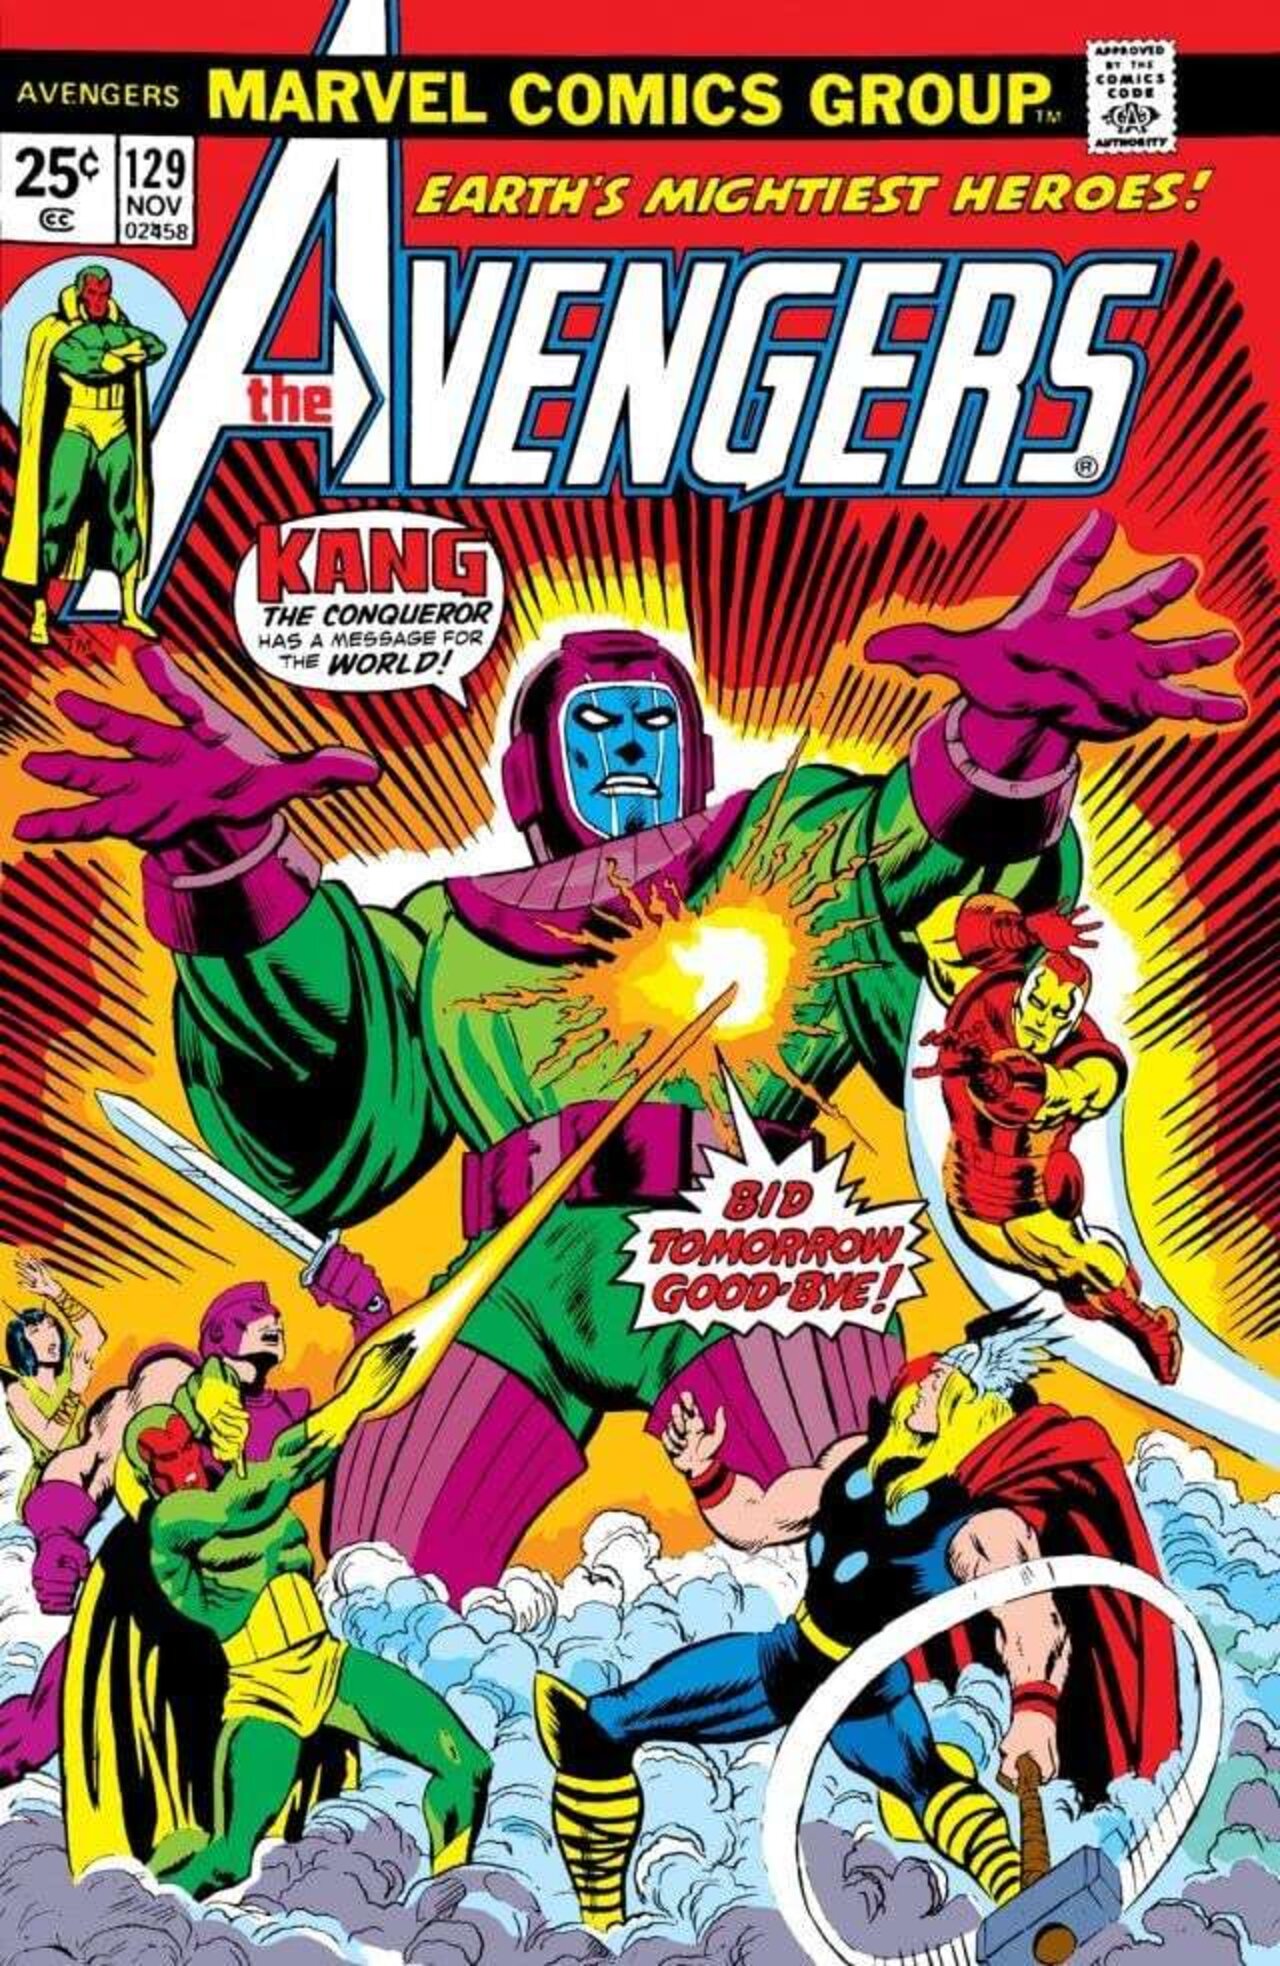 Avengers 5 Fan Poster Shows Kang Standing Over Dead Marvel Heroes